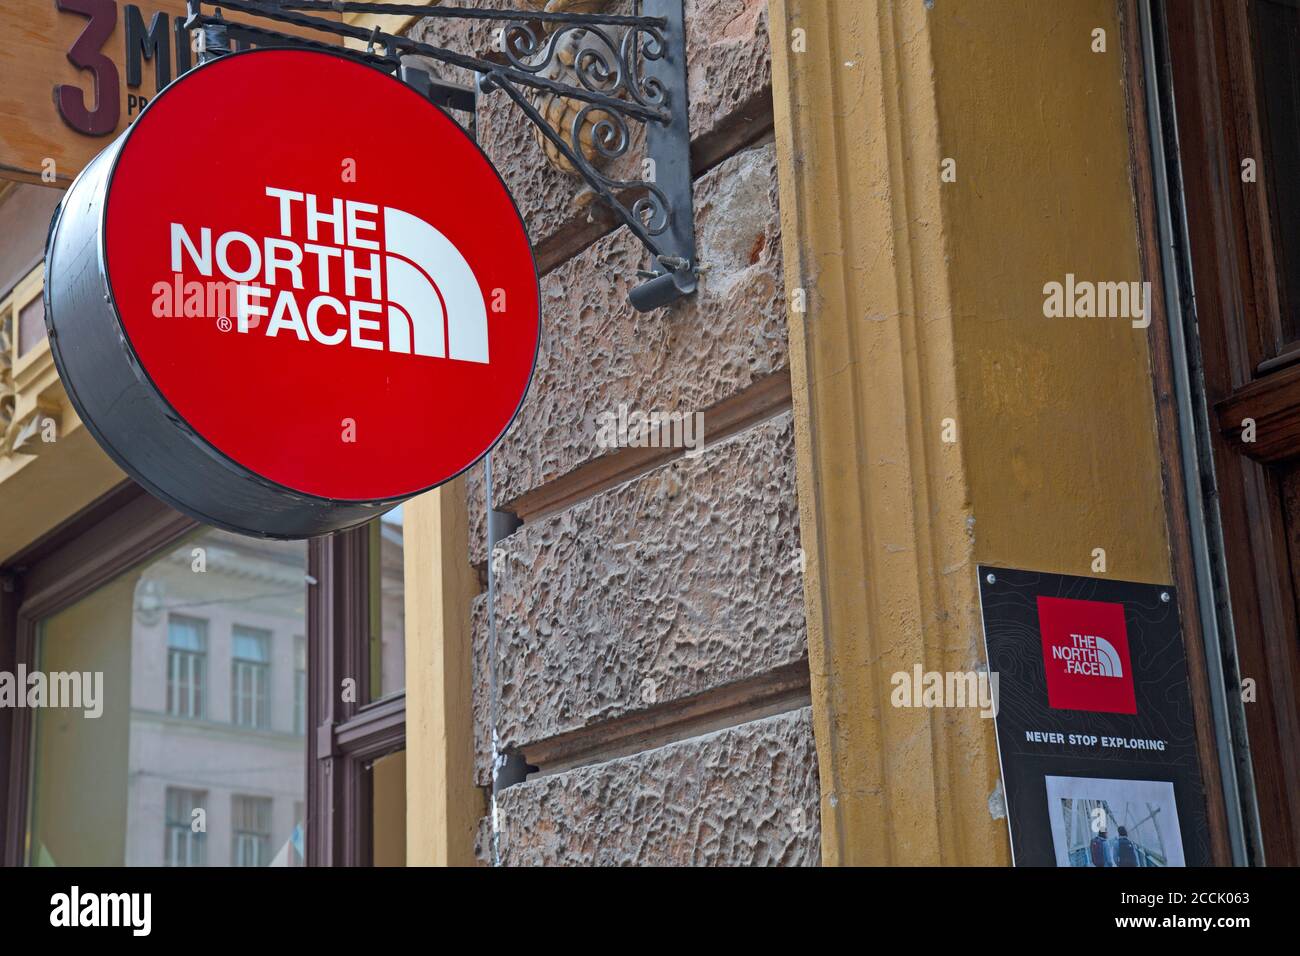 The North face shop, or store, in Ljubljana, Capital City of Slovenia Stock  Photo - Alamy